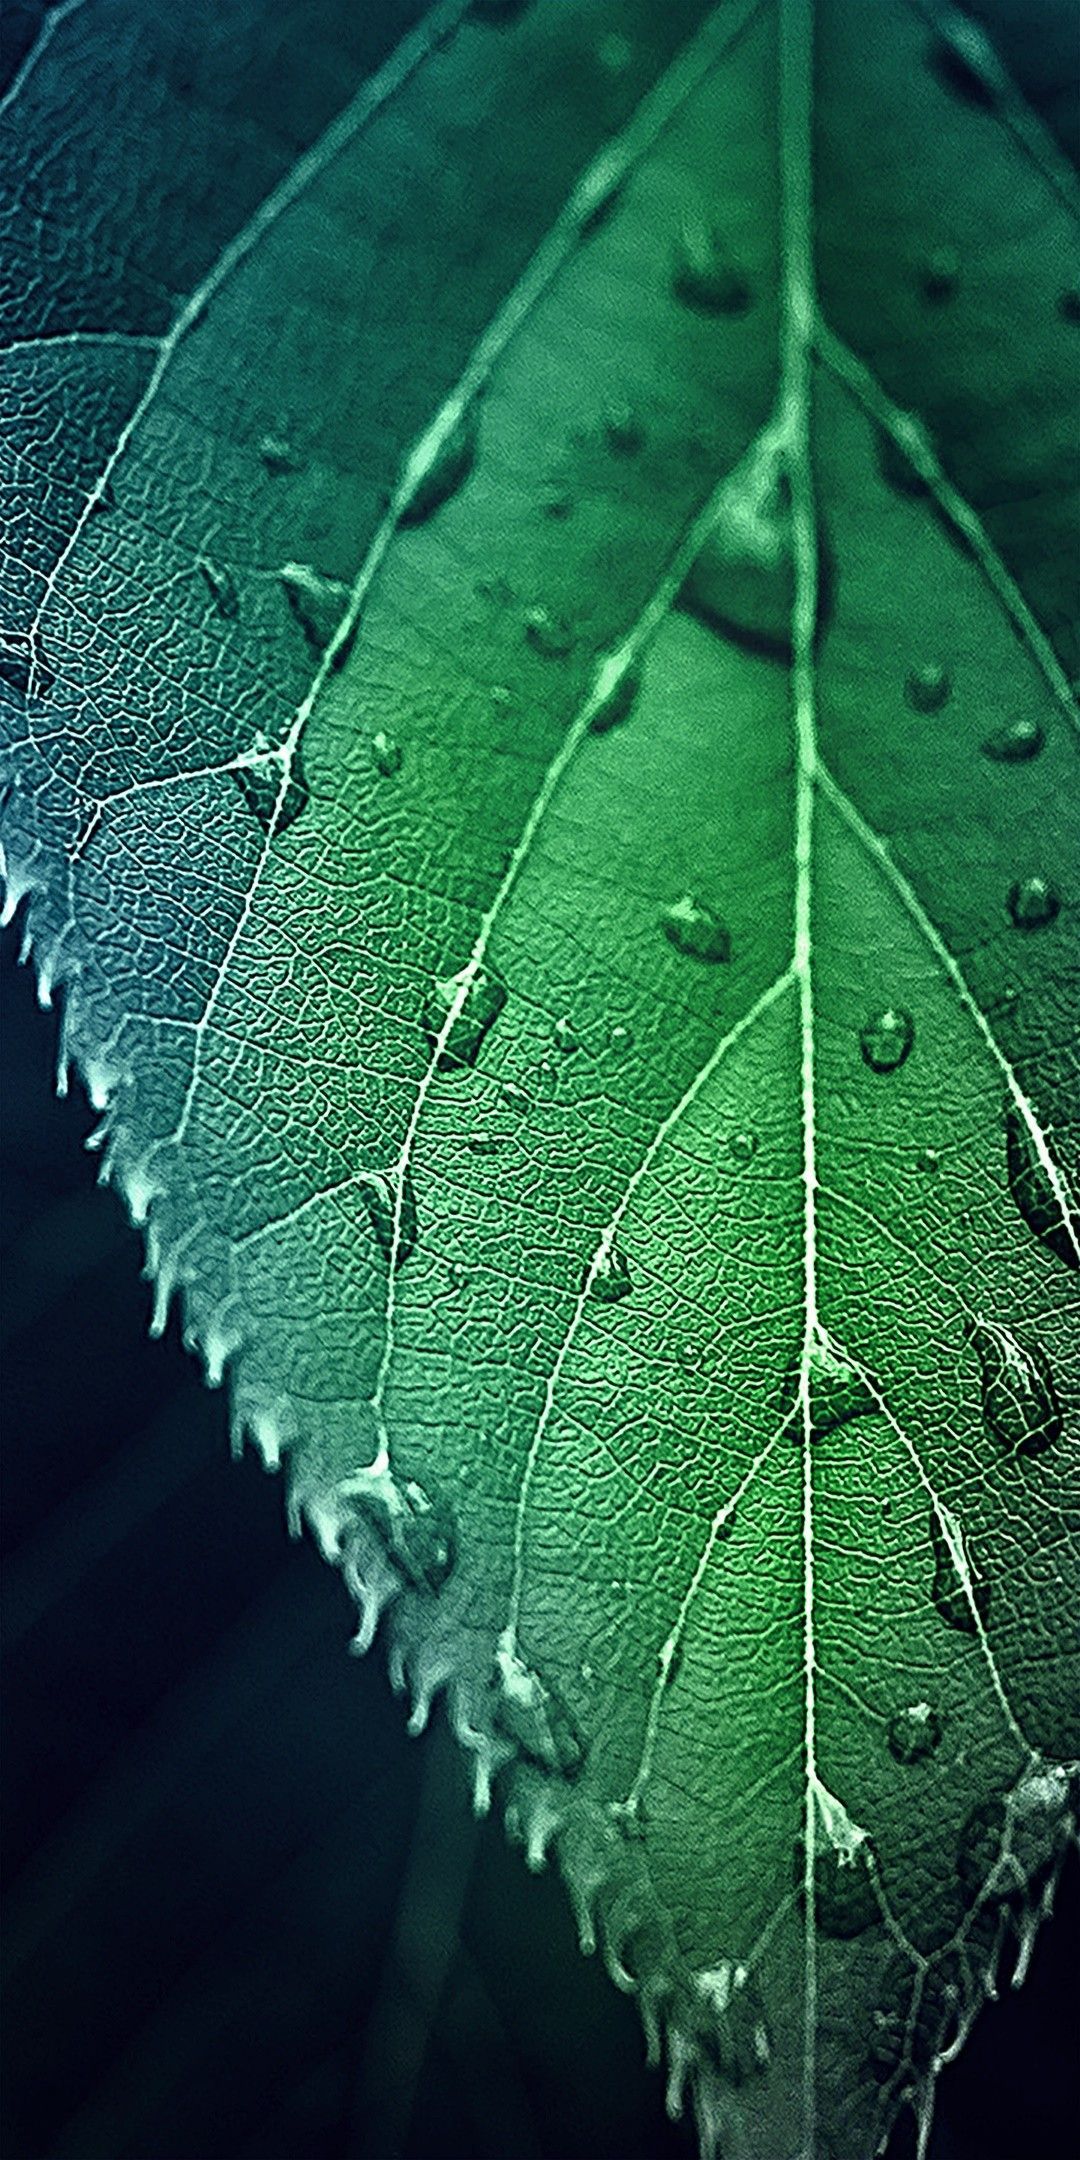 Hd leaf. Phone wallpaper, Rose gold wallpaper iphone, Leaf photography